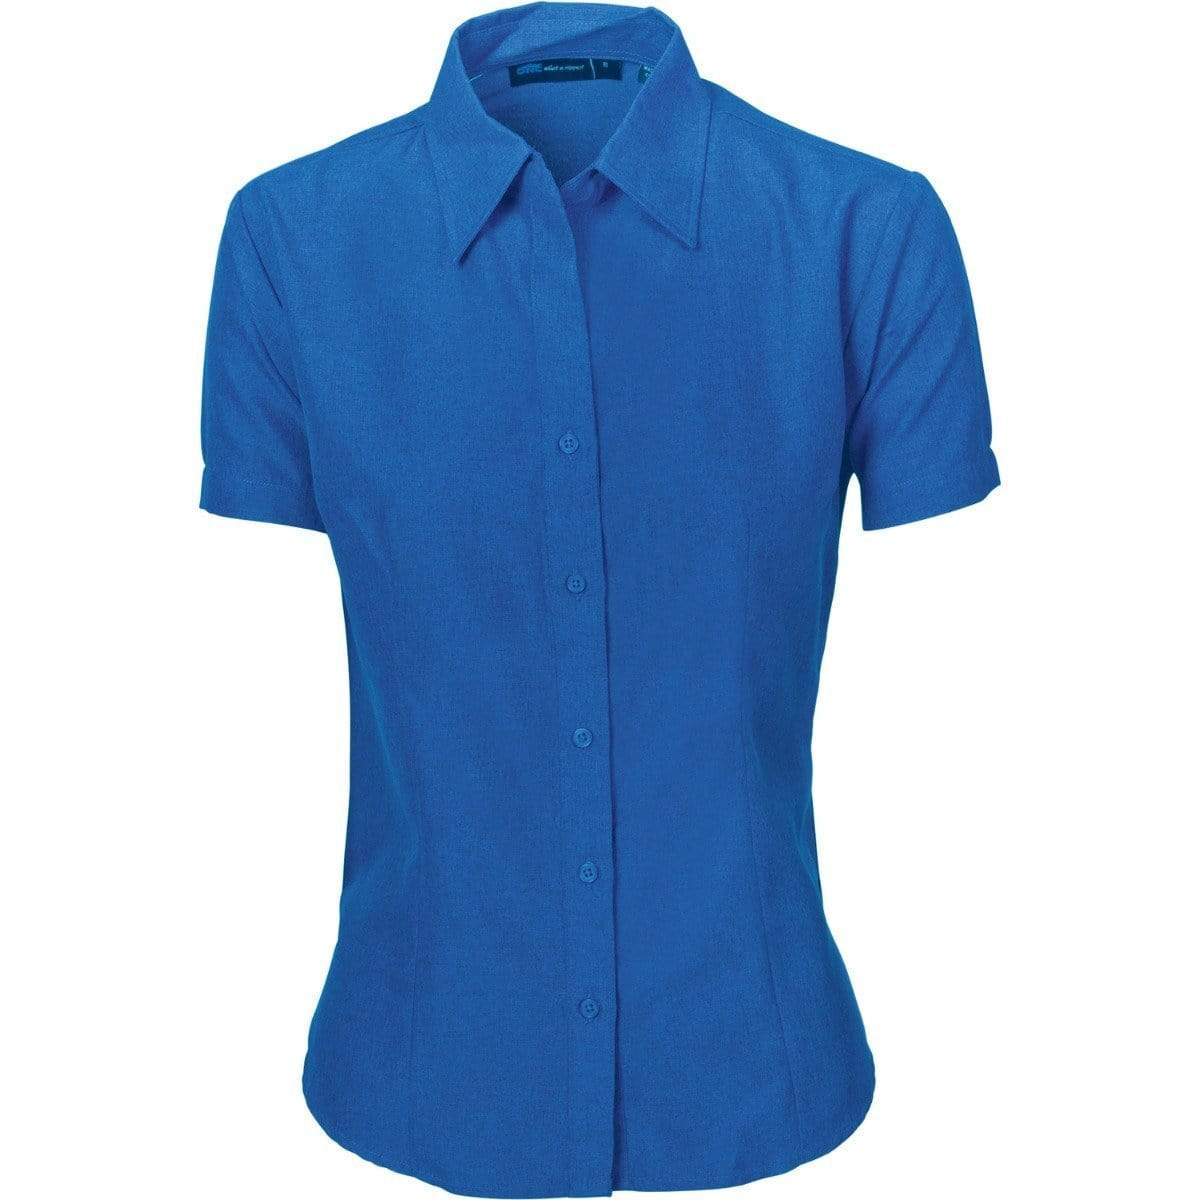 Dnc Workwear Ladies Cool-breathe Short Sleeve Shirt - 4237 Corporate Wear DNC Workwear Royal Blue 6 